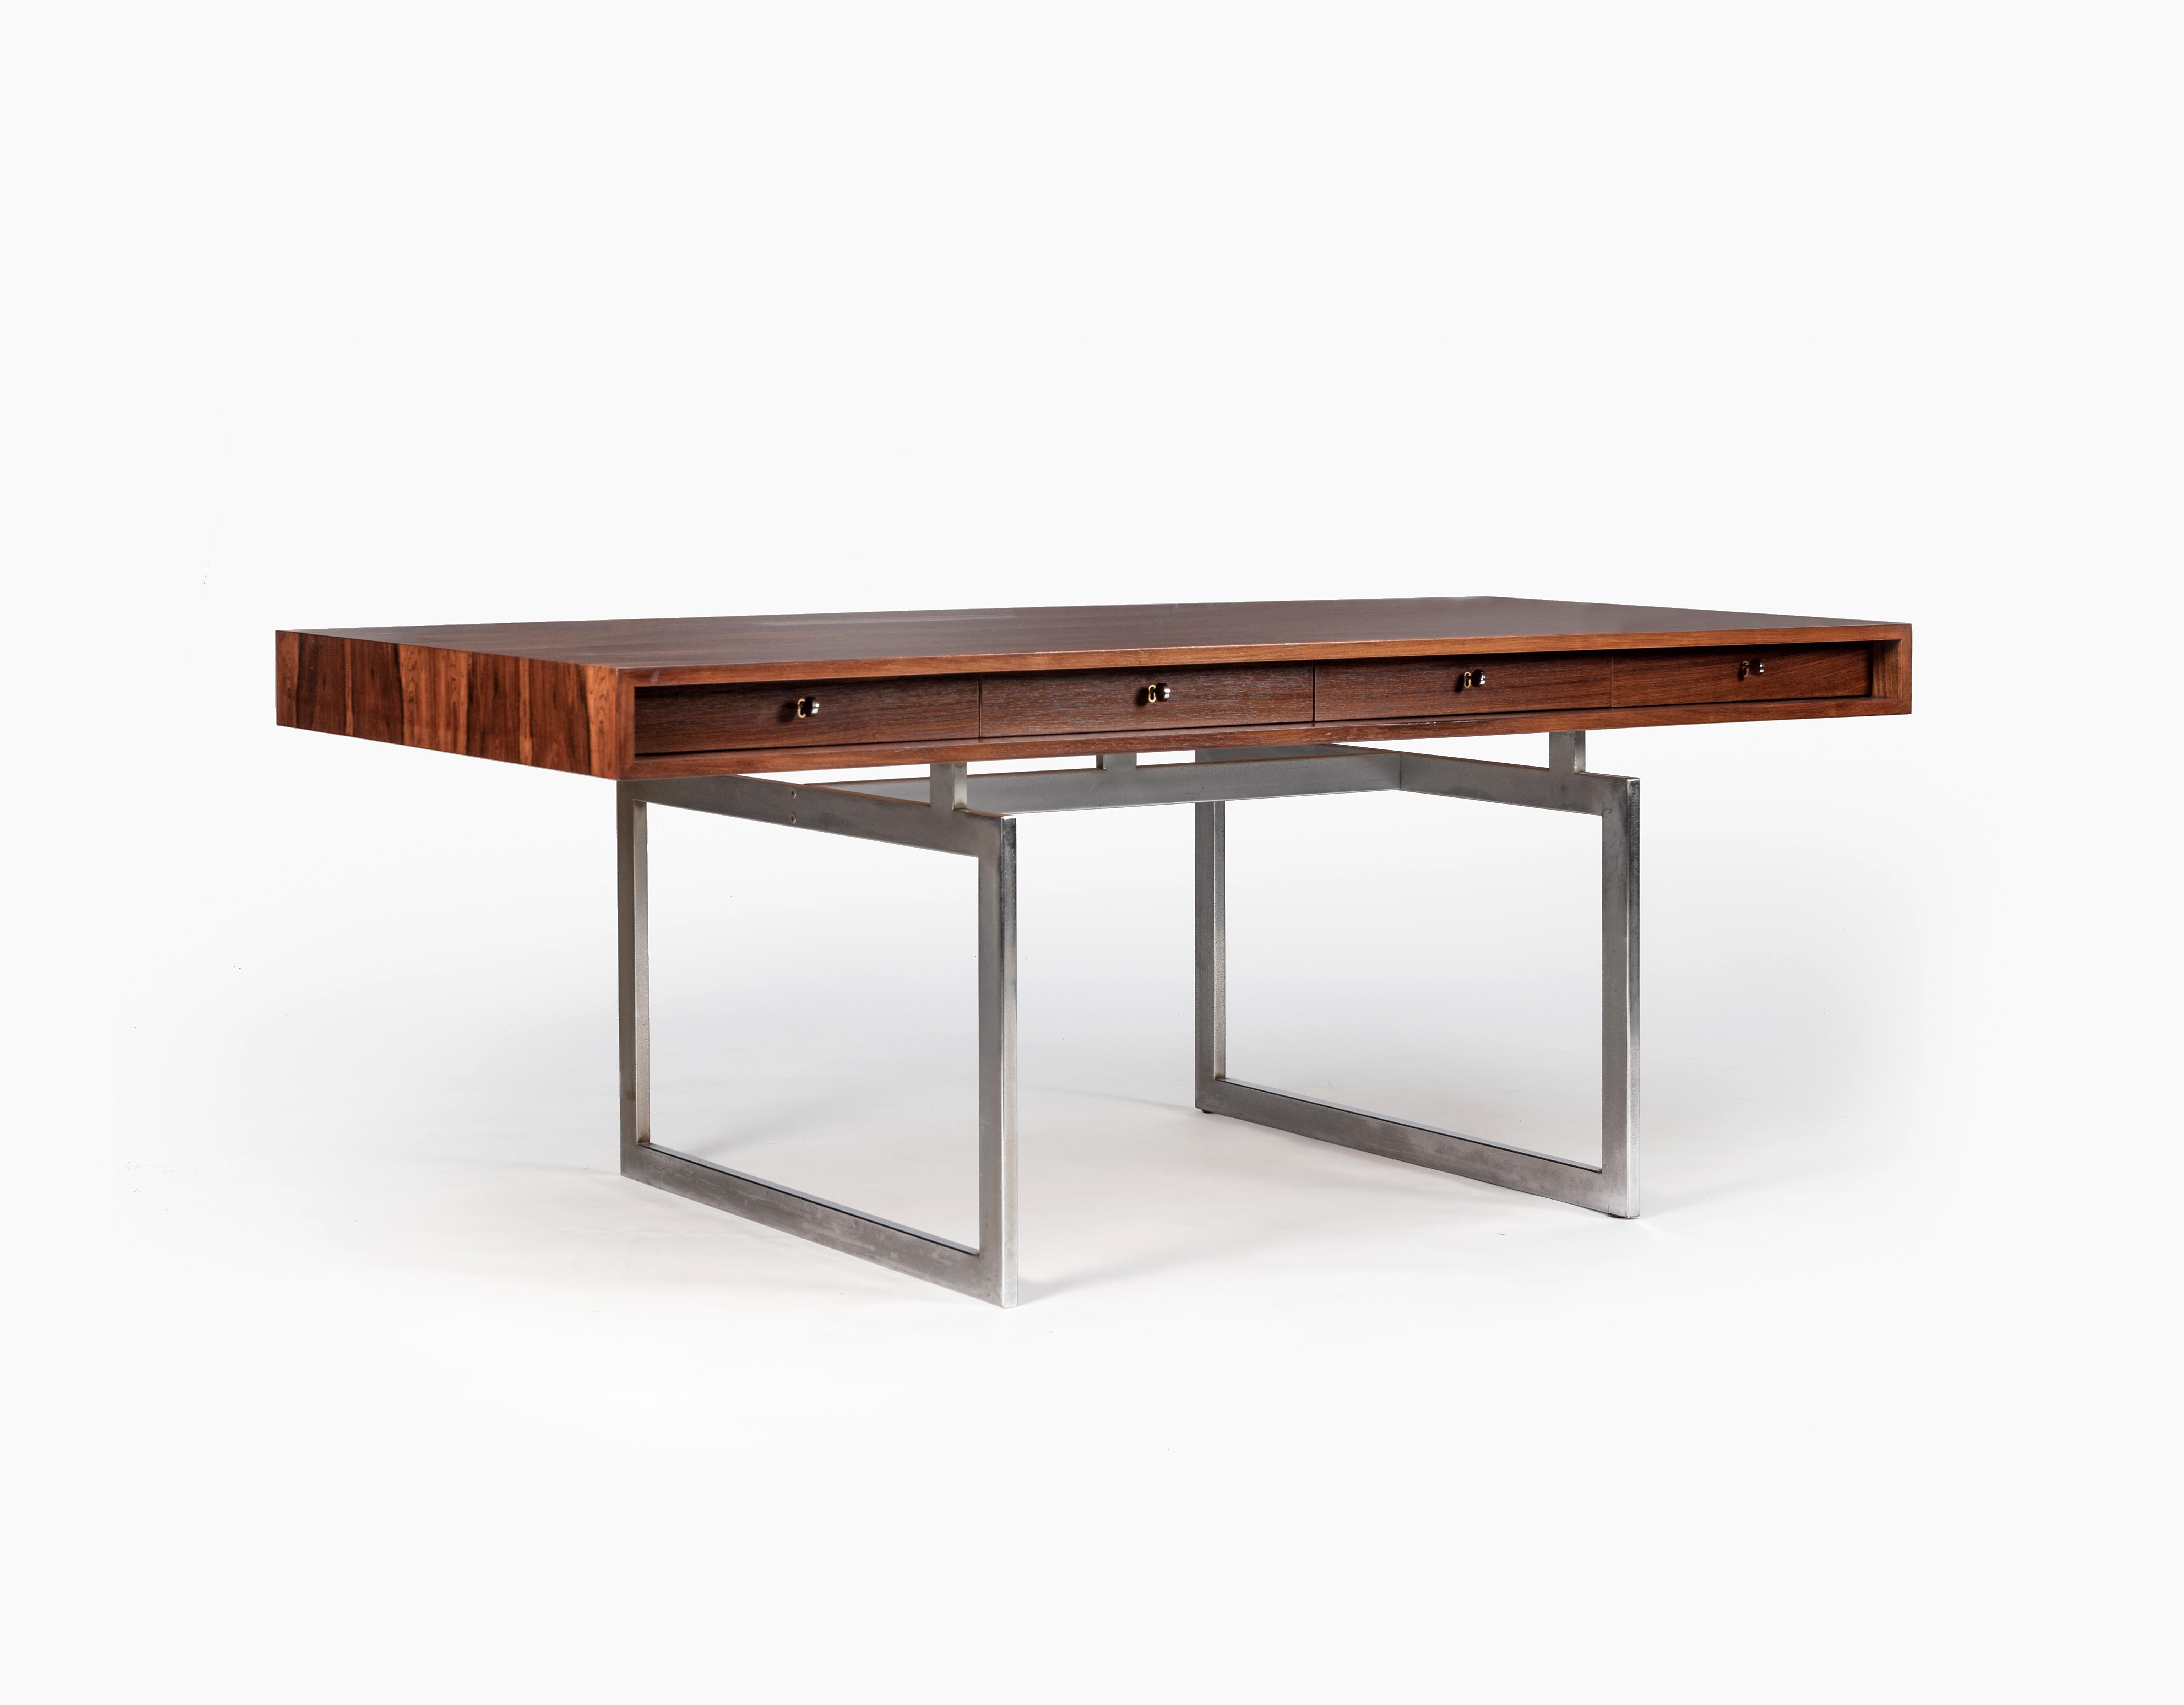 Rare model 901 desk in rosewood by Danish designer Bodil Kjaer produced by cabinet maker E. Pedersen & Søn and distributed by Jason Danmark circa 1959.

